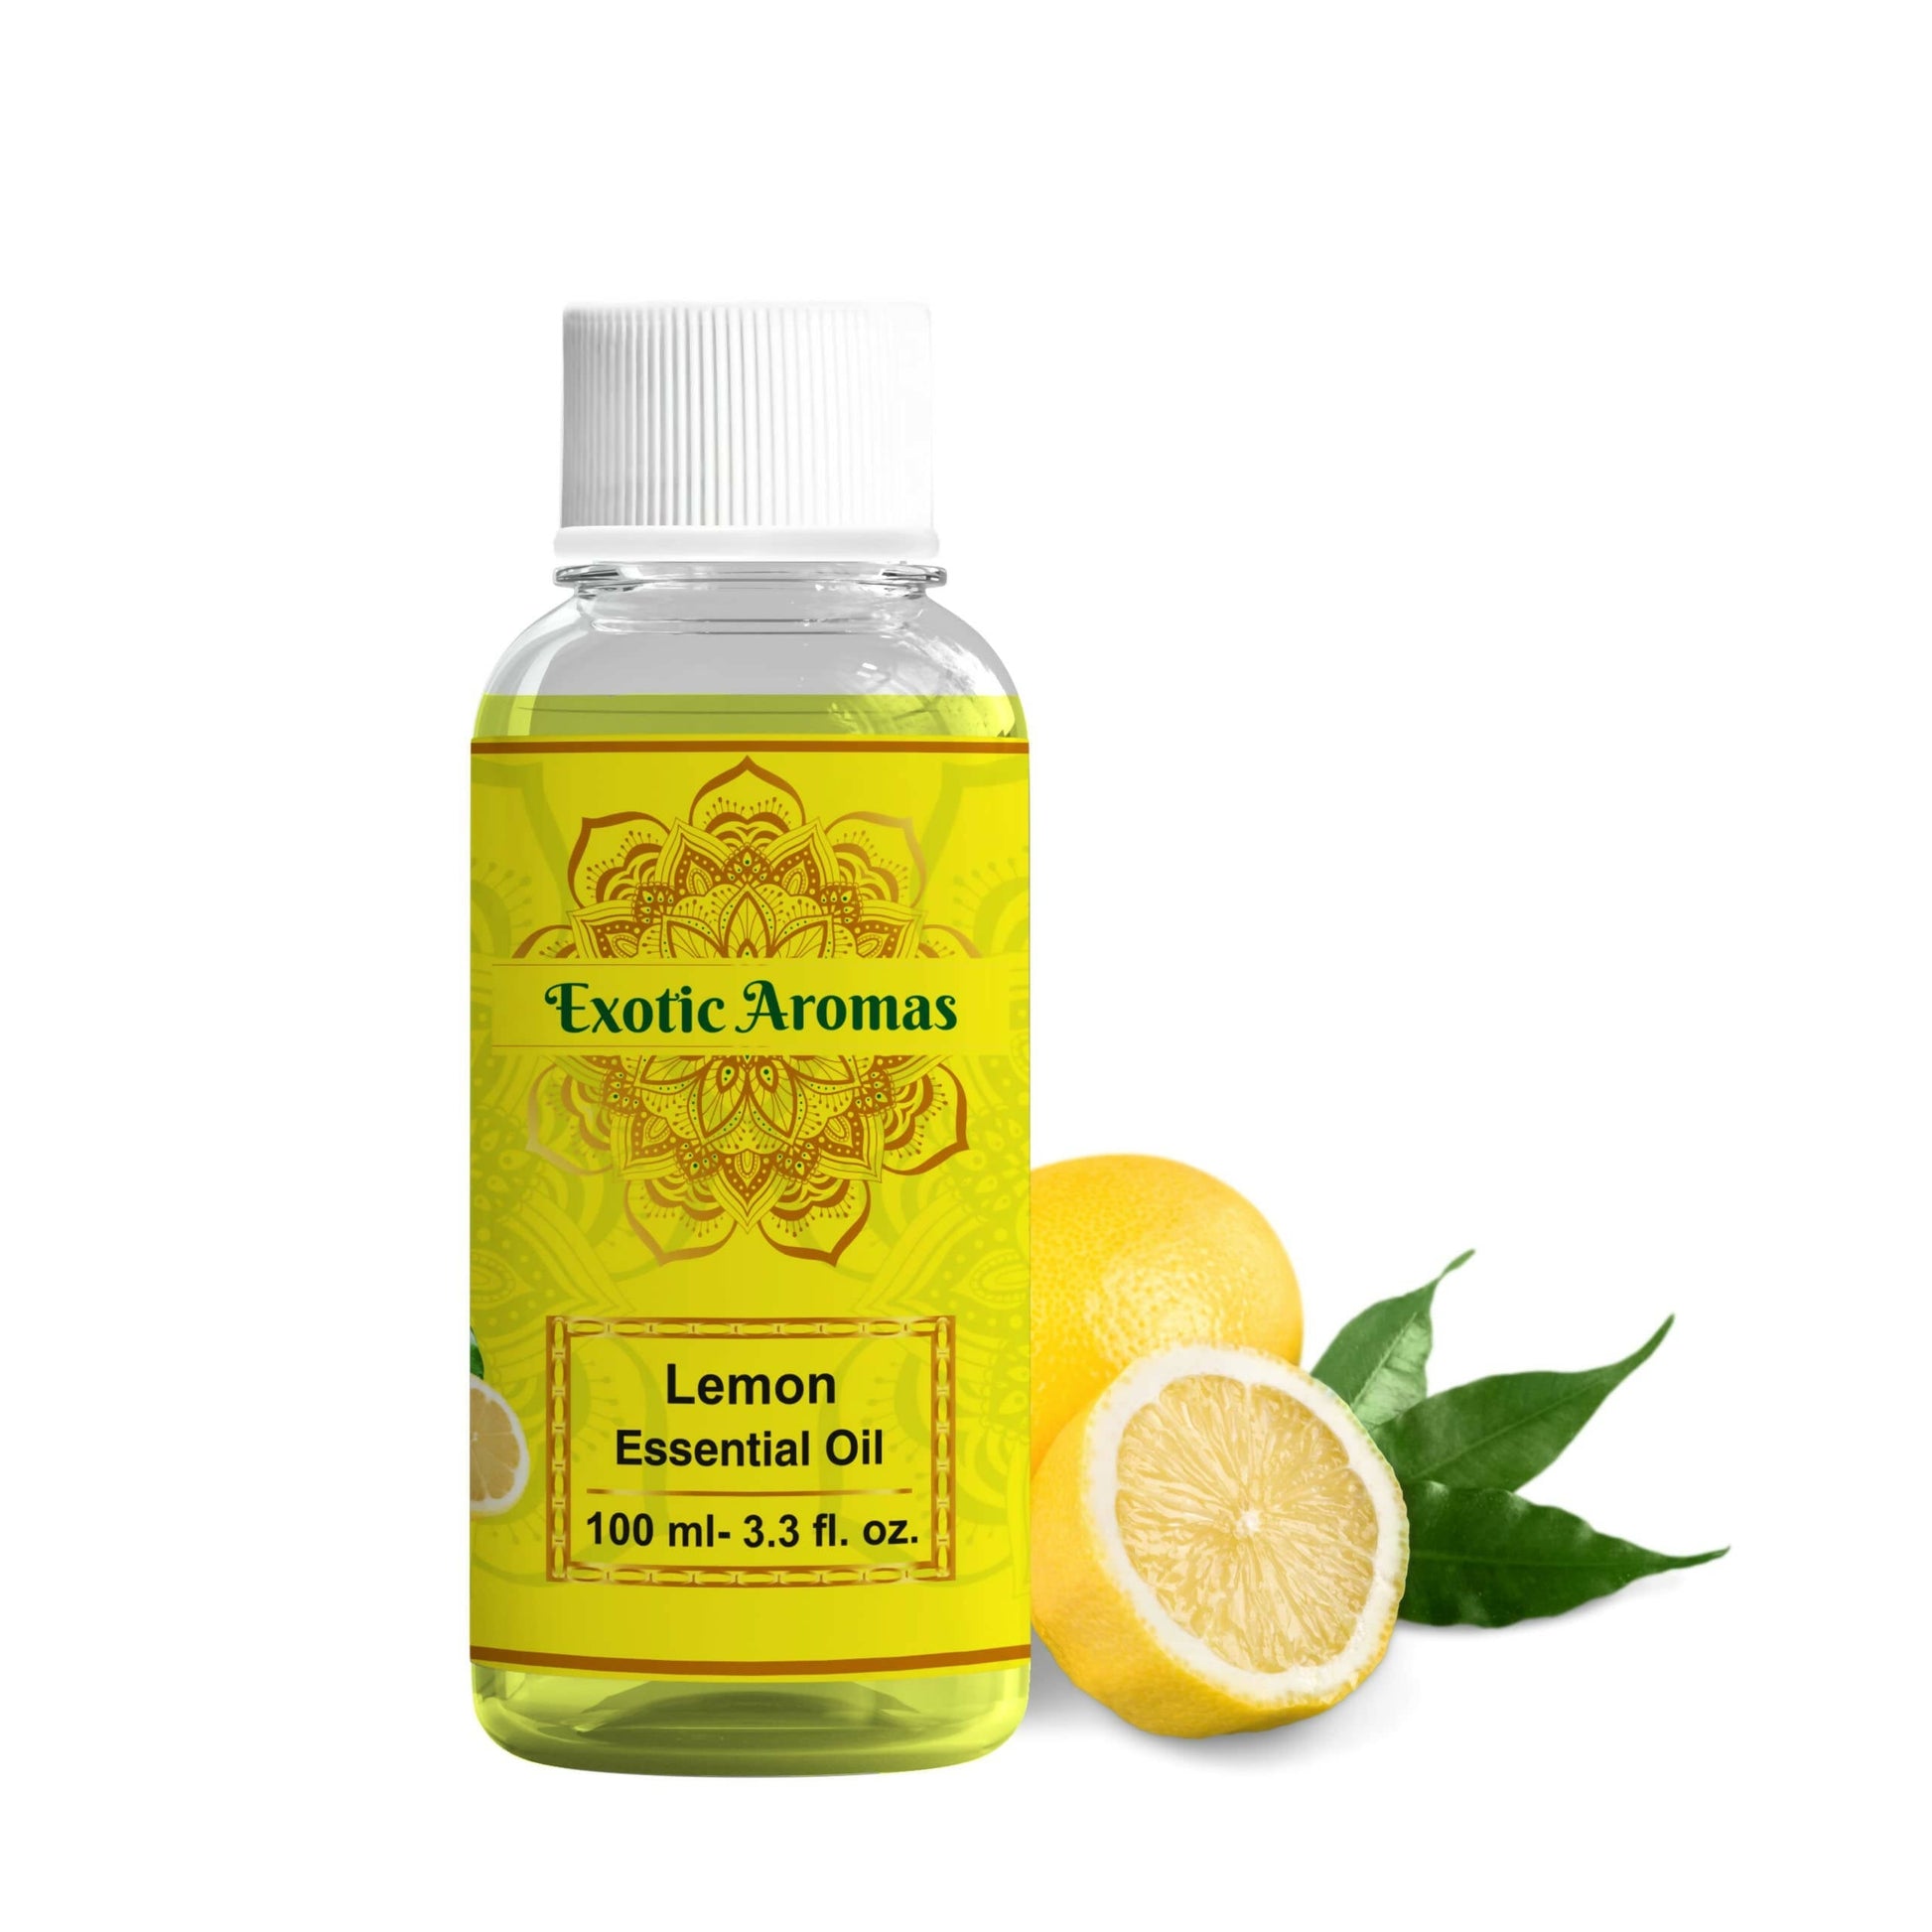 Exotic Aromas Lemon Essential Oil - BUDNEN